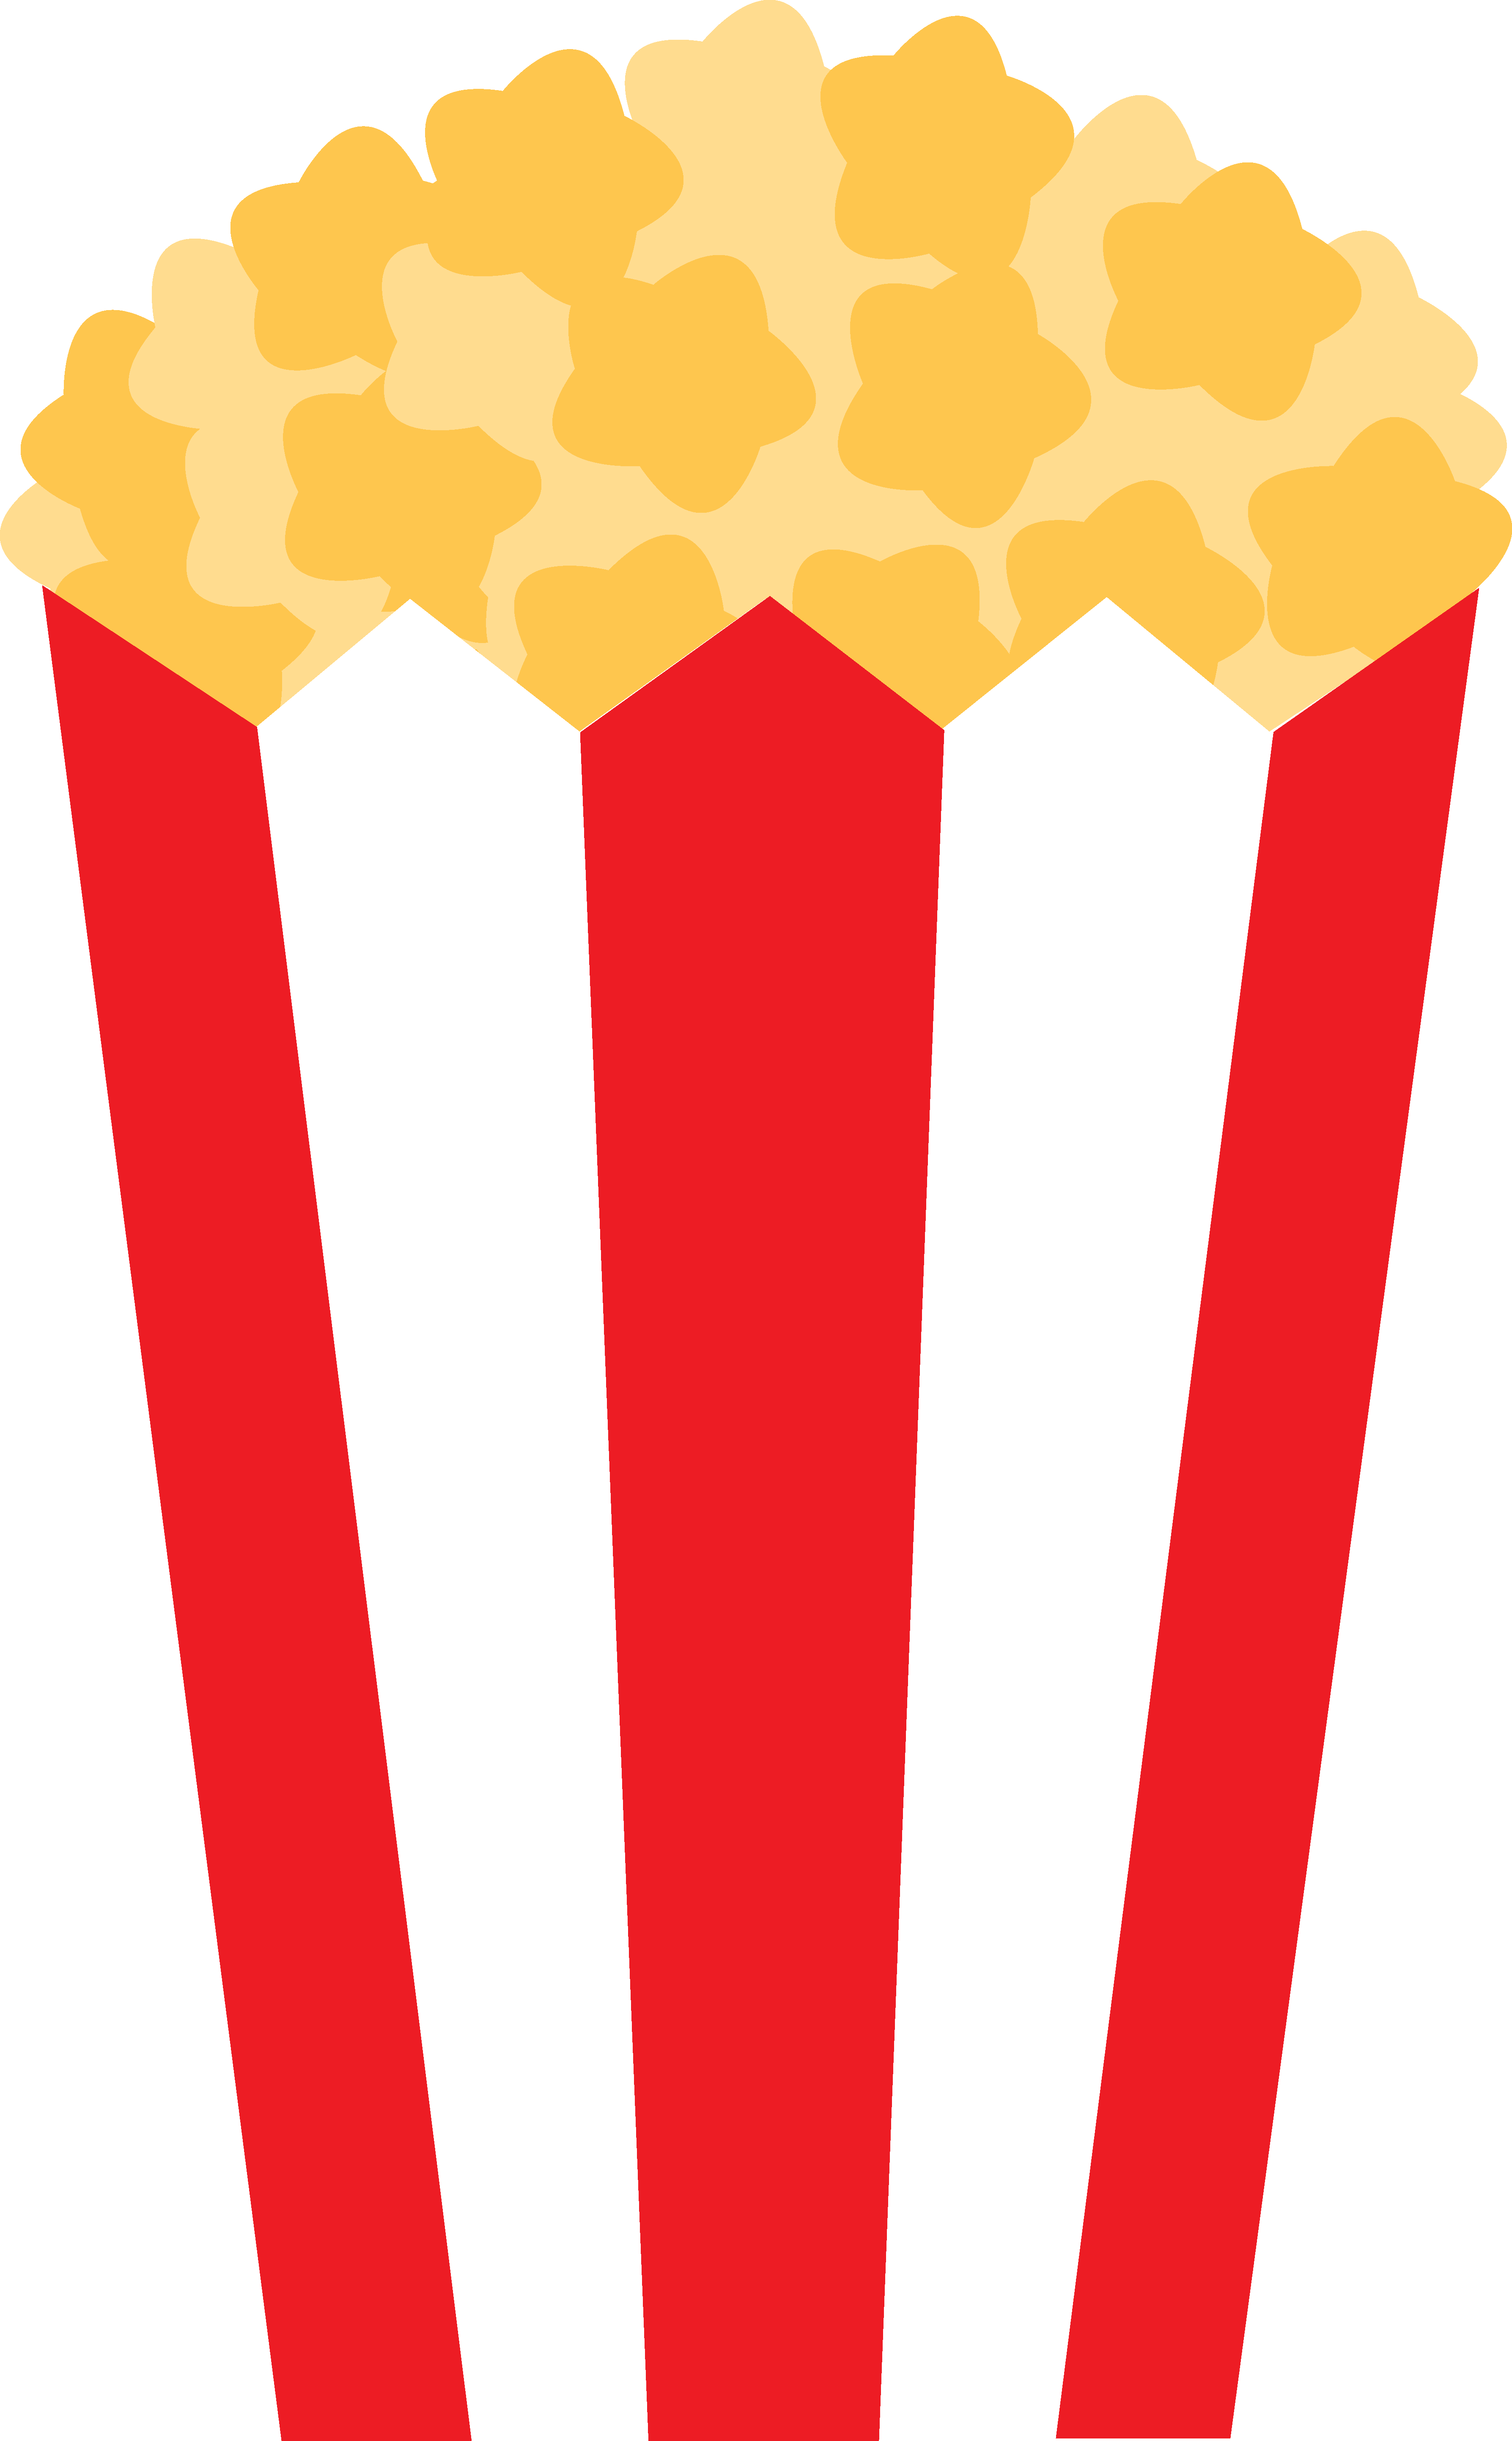 Cartoon Popcorn Images